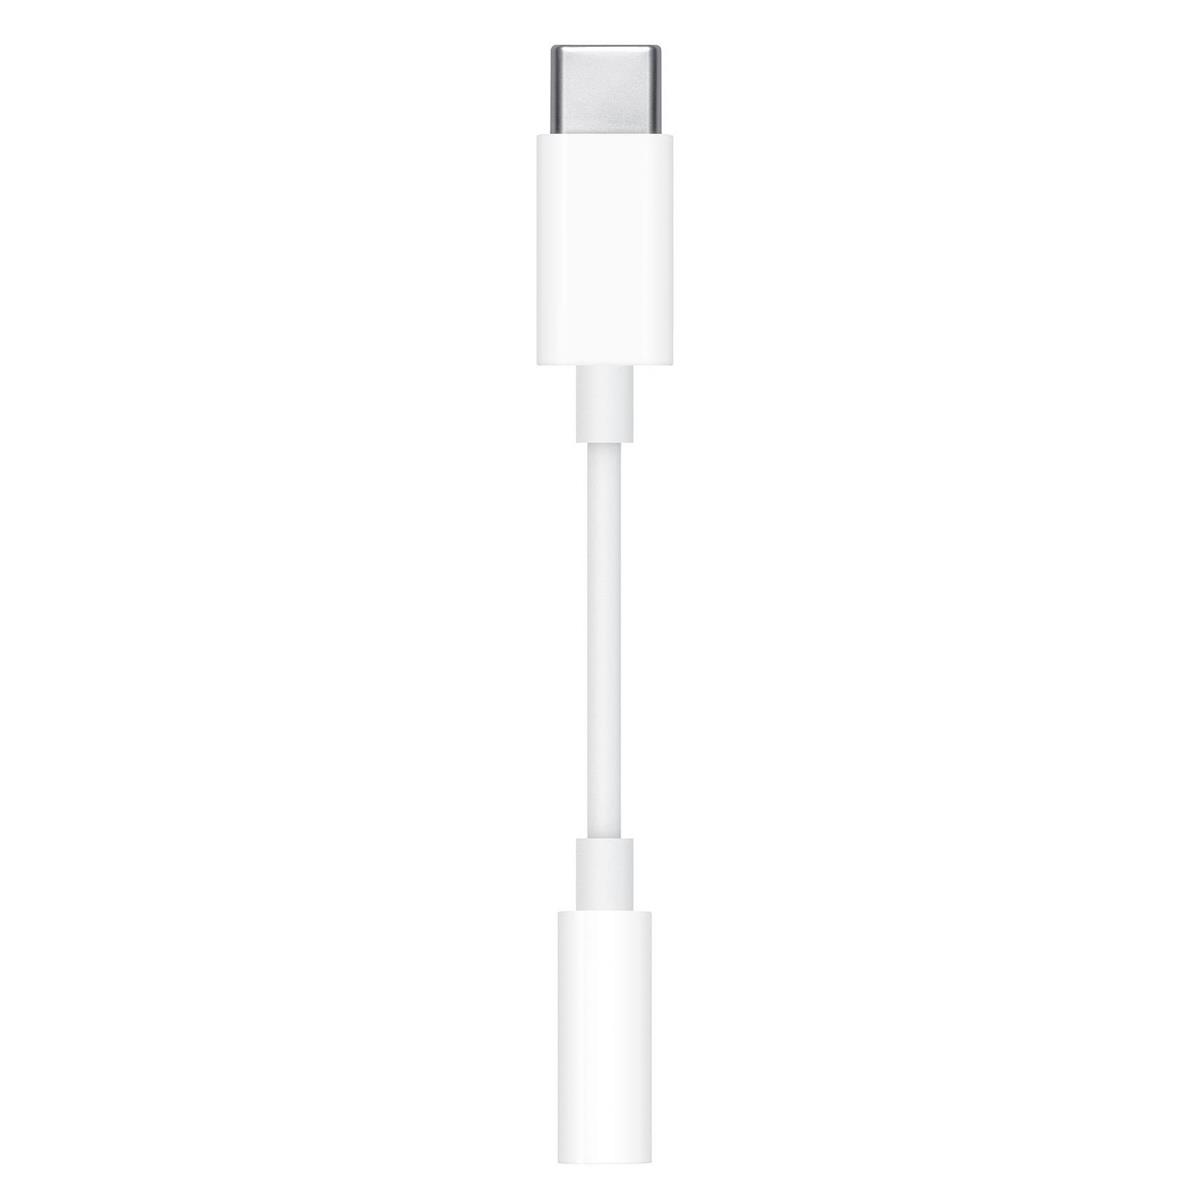 Image of Apple USB-C to 3.5mm Headphone Jack Adapter